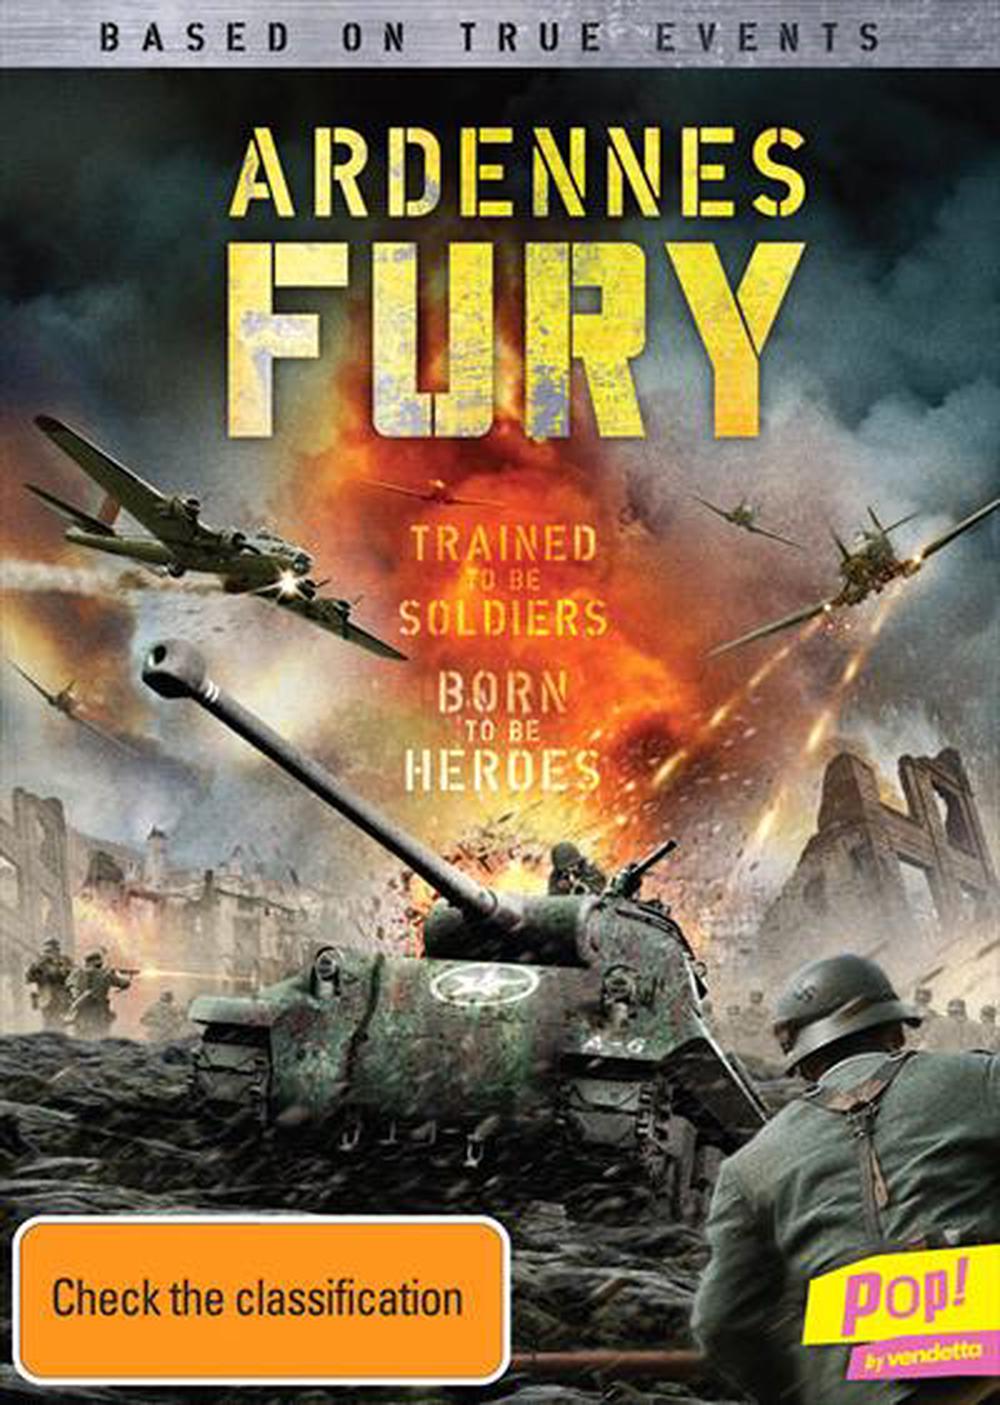 Fury [DVD]